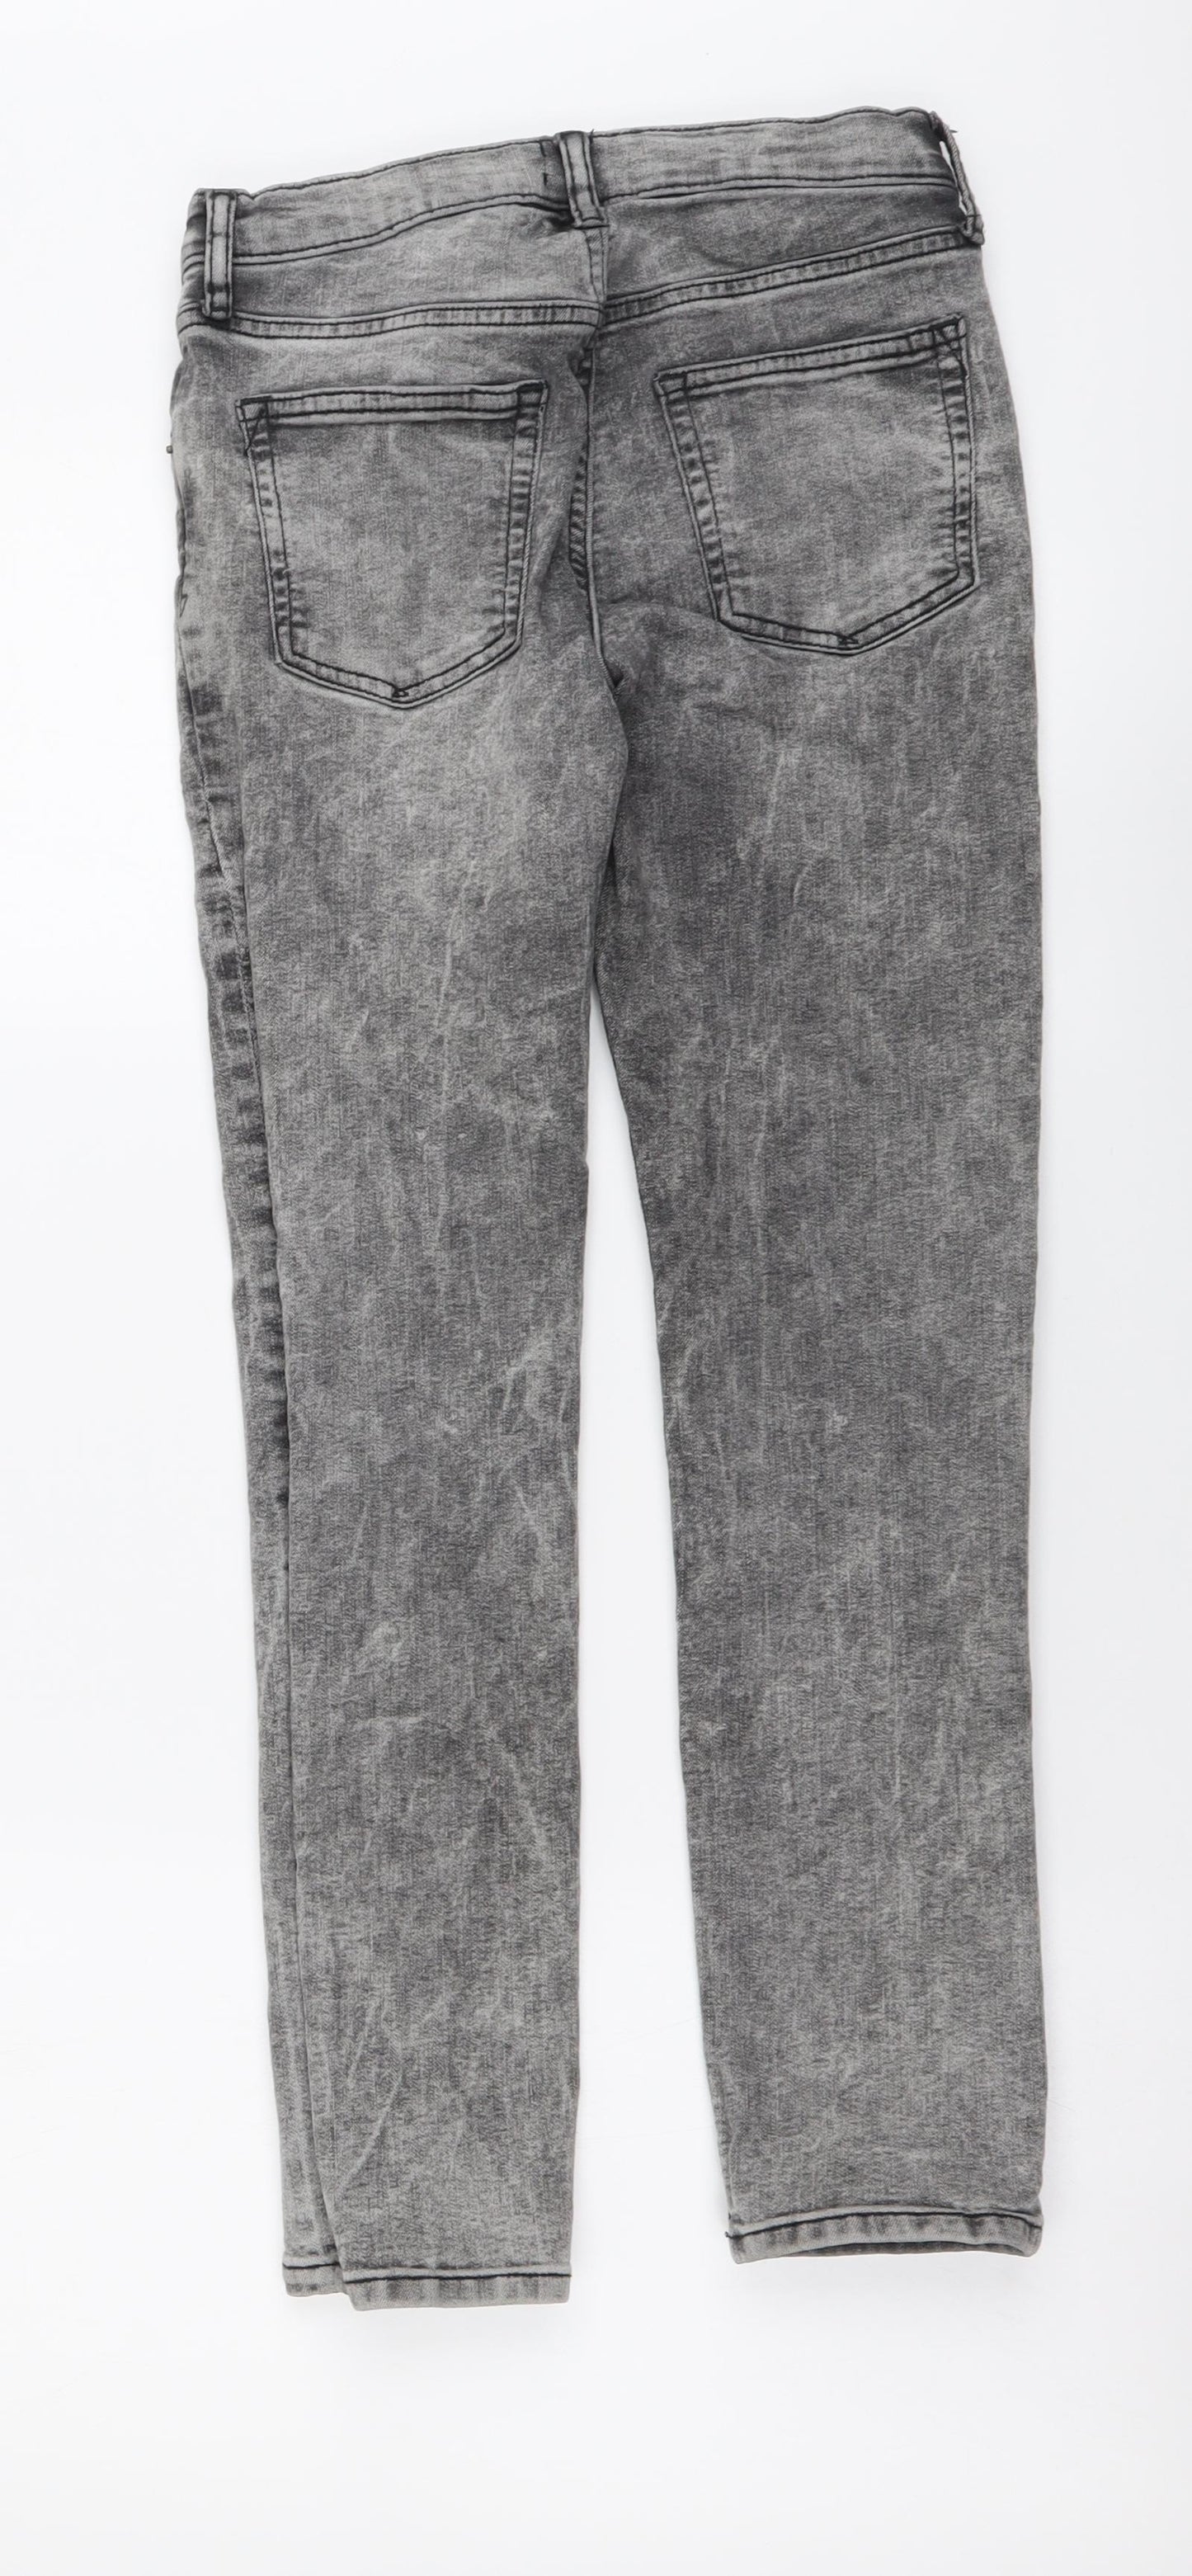 Gap Girls Grey Cotton Skinny Jeans Size 10-11 Years Regular Button